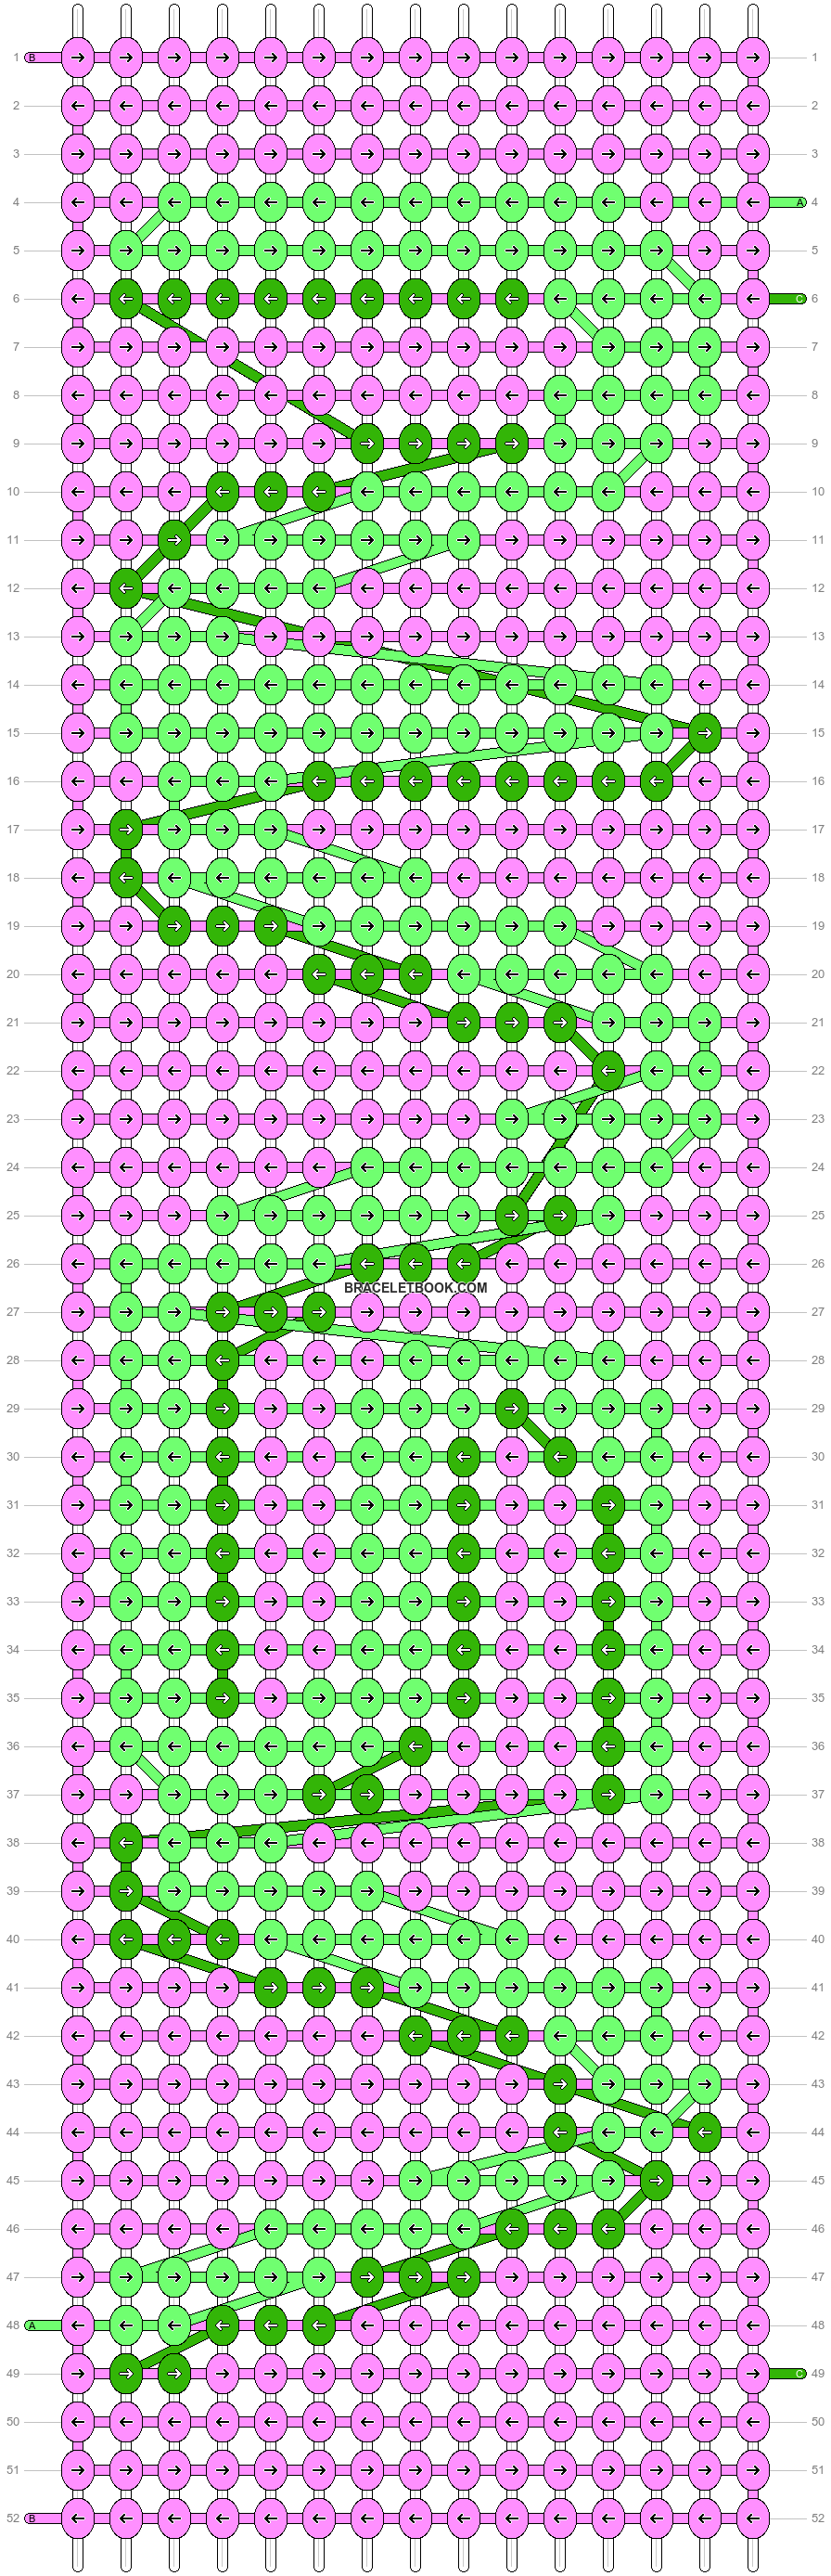 Alpha pattern #57624 variation #101092 pattern